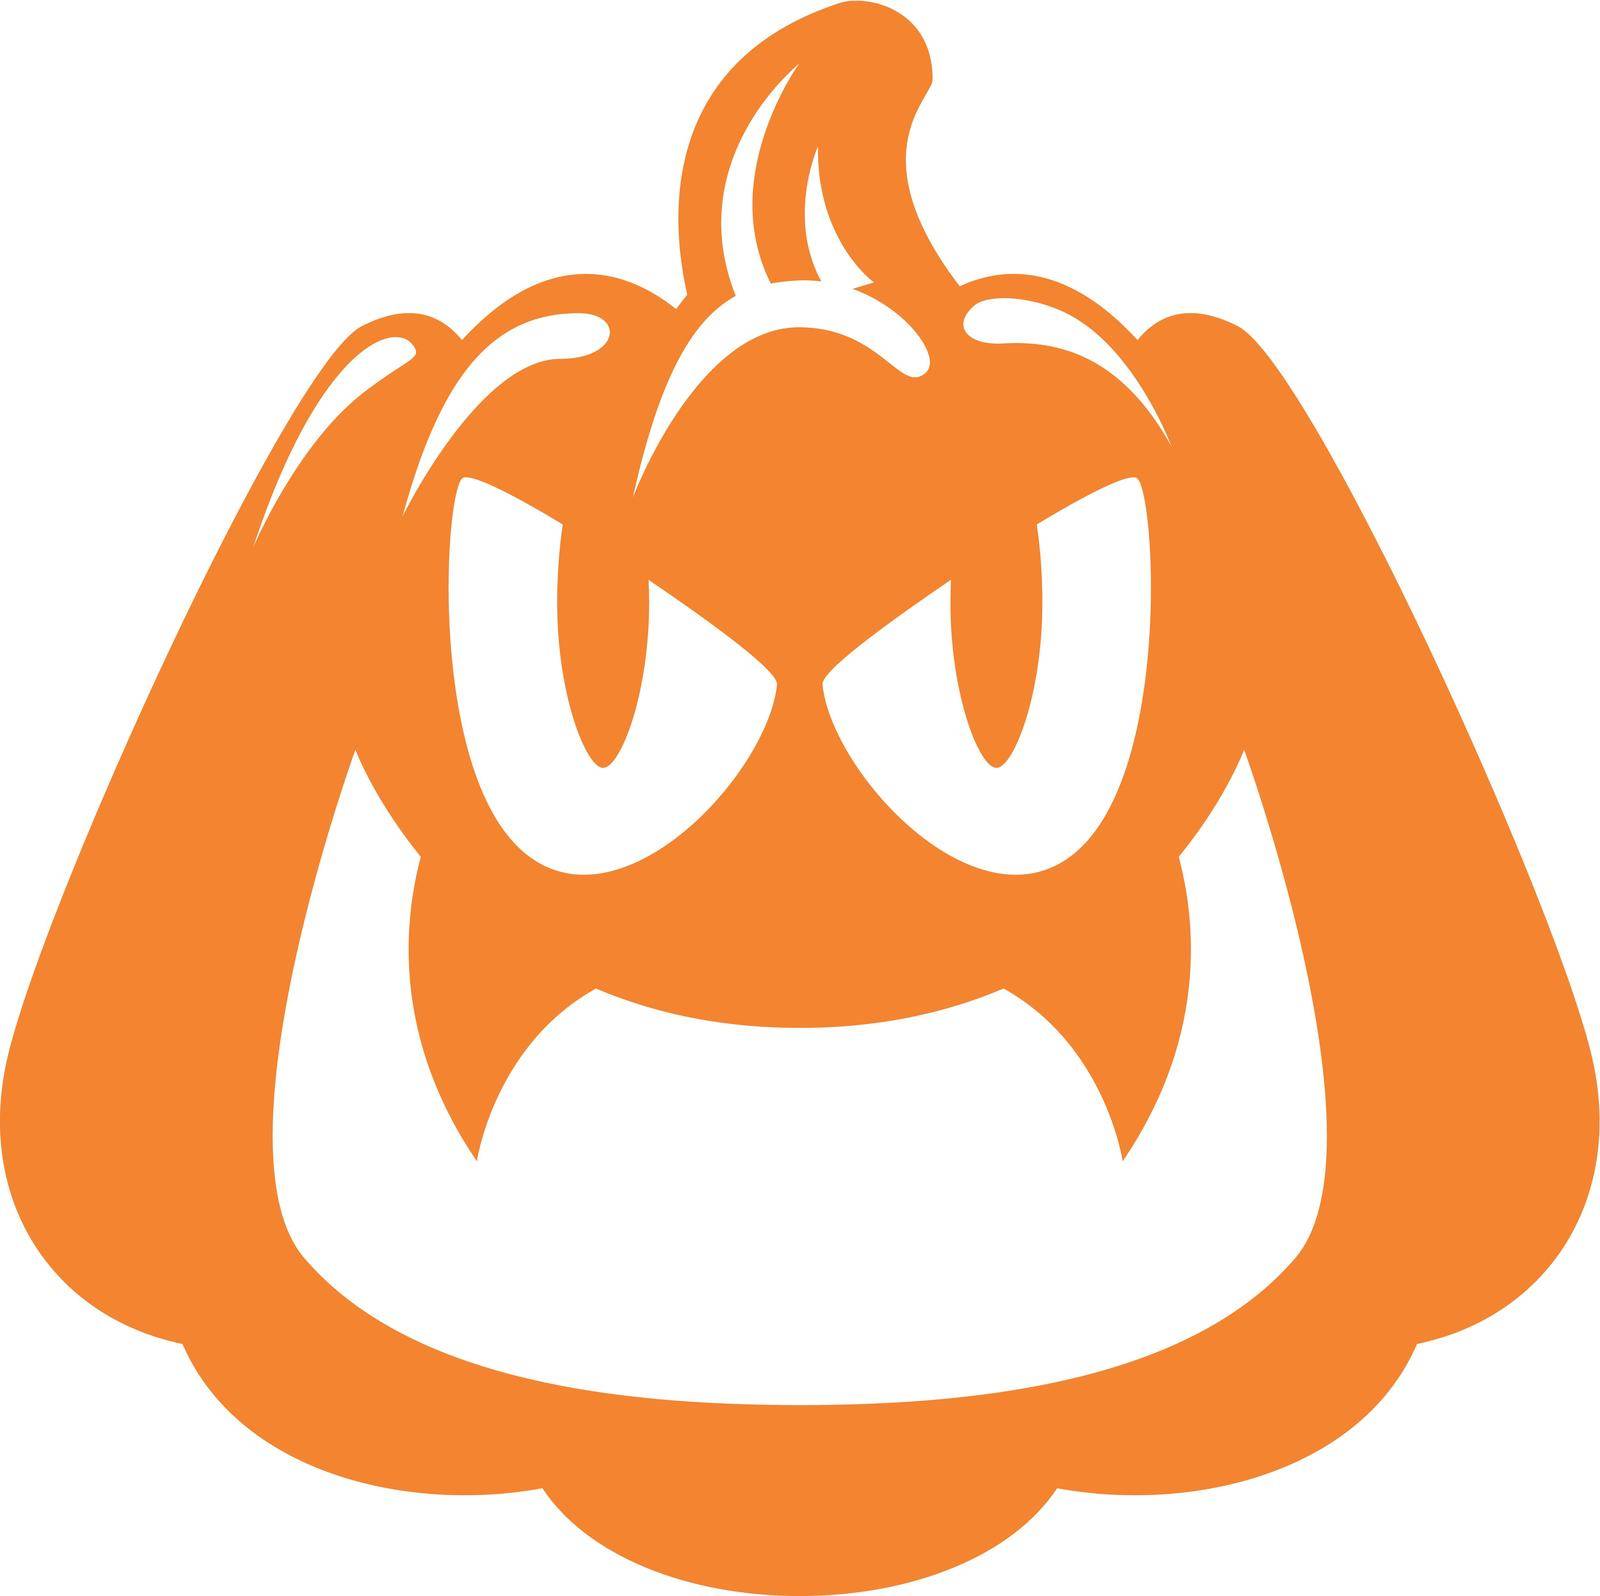 Evil grin pumpkin silhouette. Orange halloween face by LadadikArt